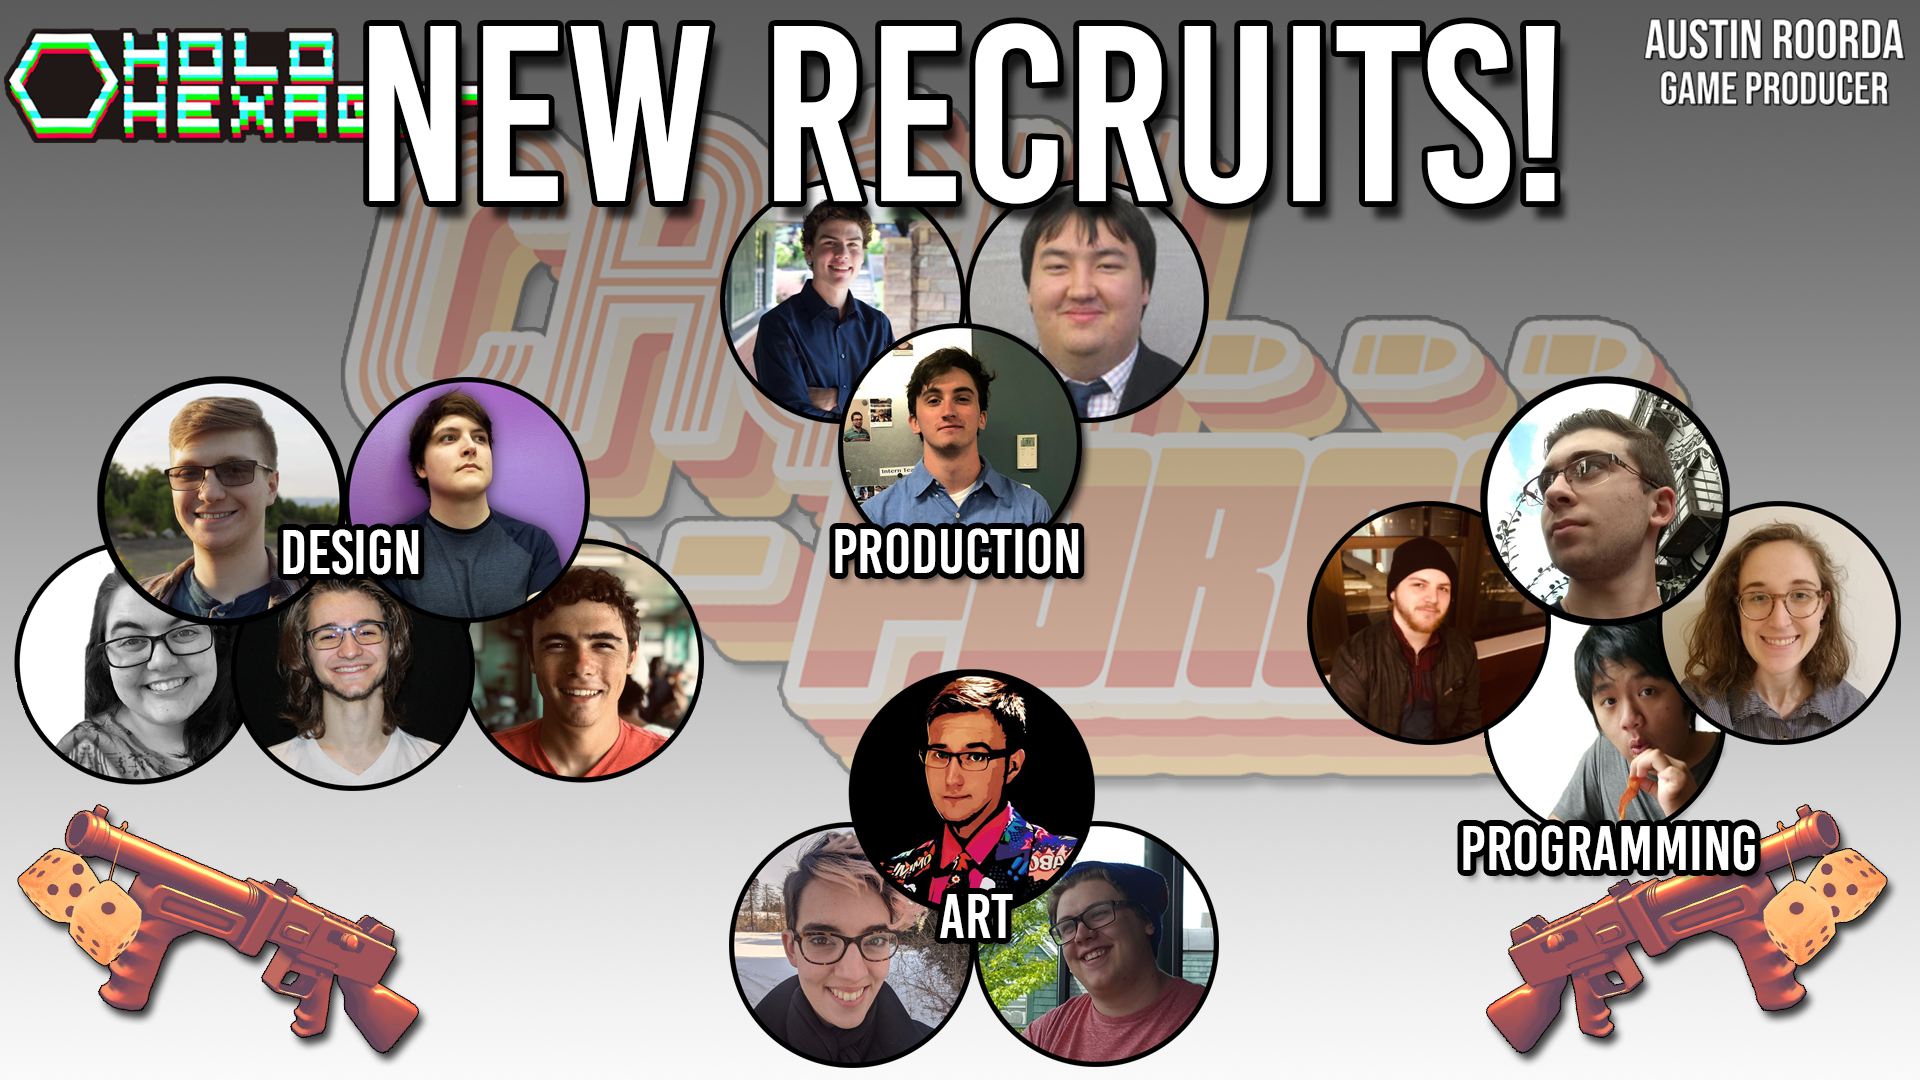 Development Blog #5: New Recruits!